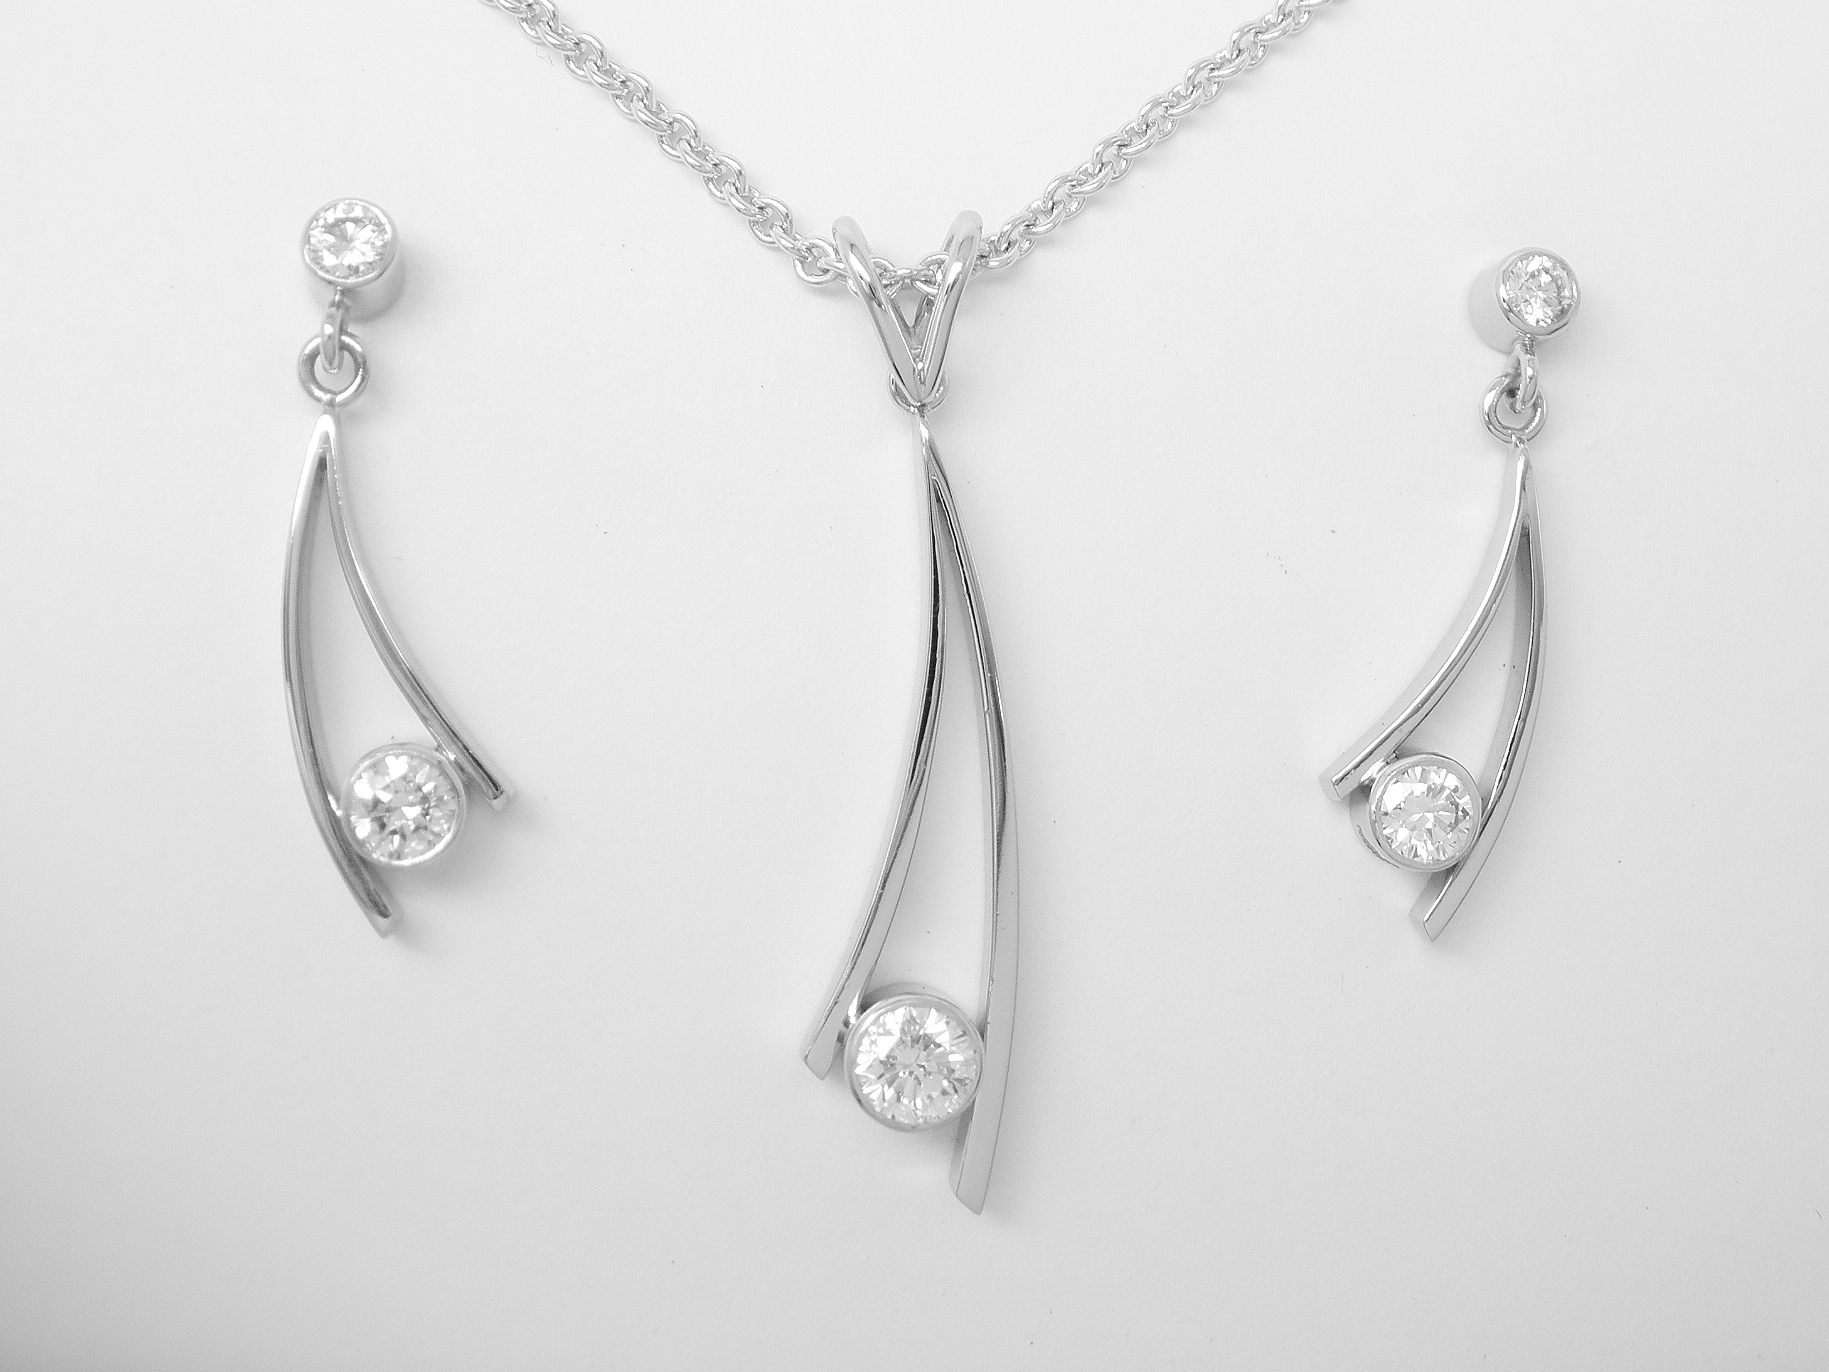 Single stone rub-over set round brilliant cut diamond curved wishbone style pendant & earring set mounted in platinum.